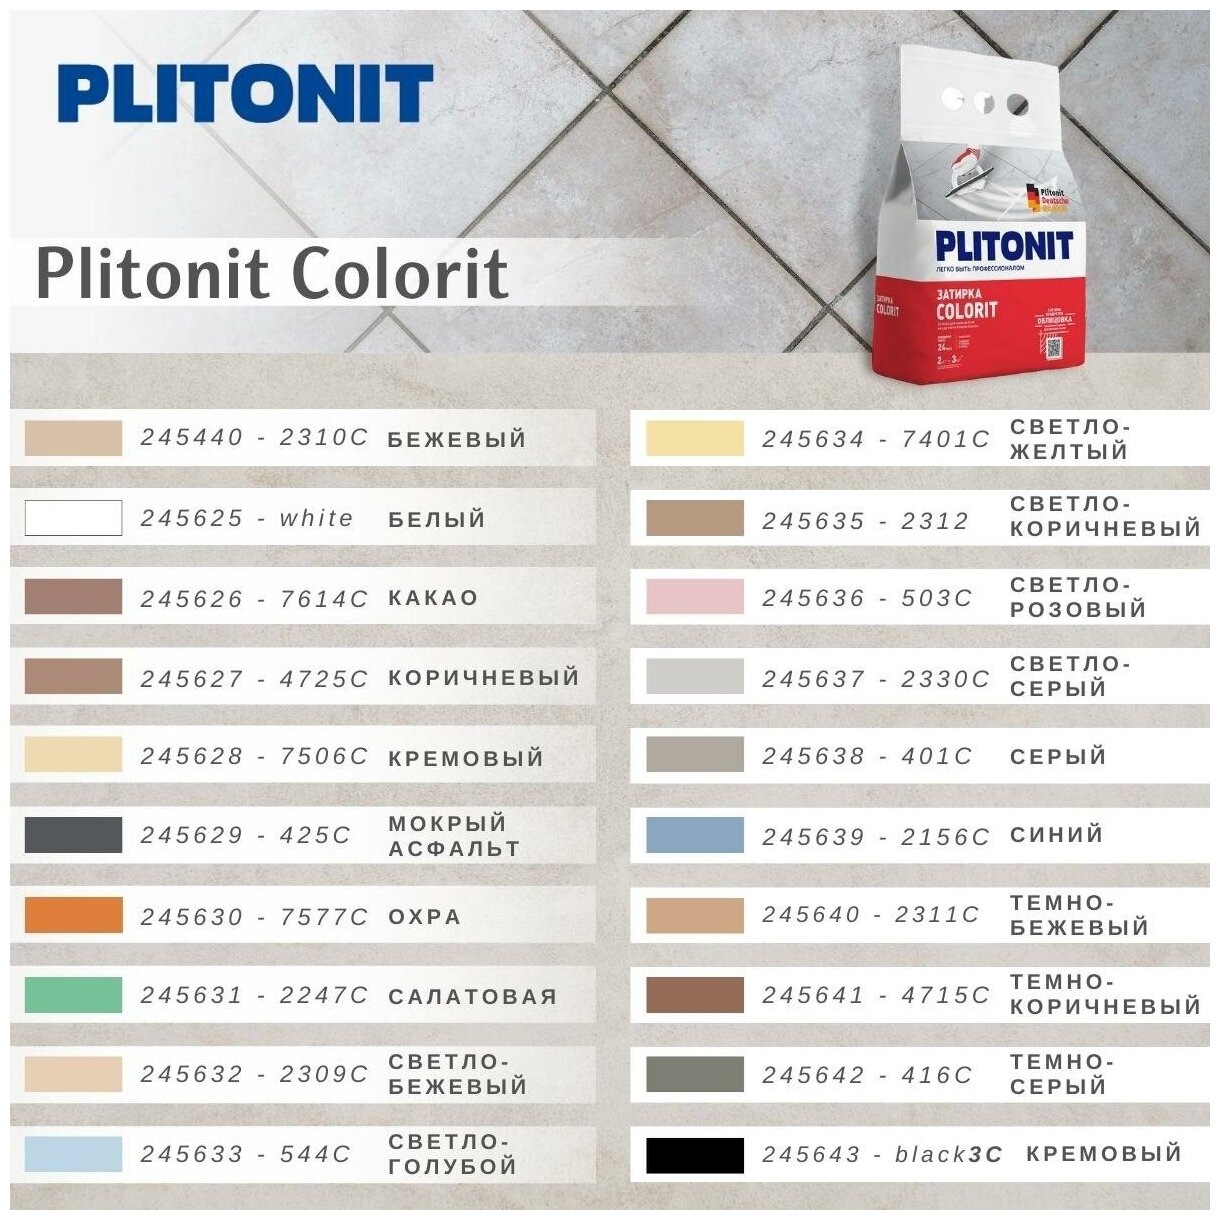 Plitonit Colorit Затирка для плитки 2 килограмма черная - фотография № 3